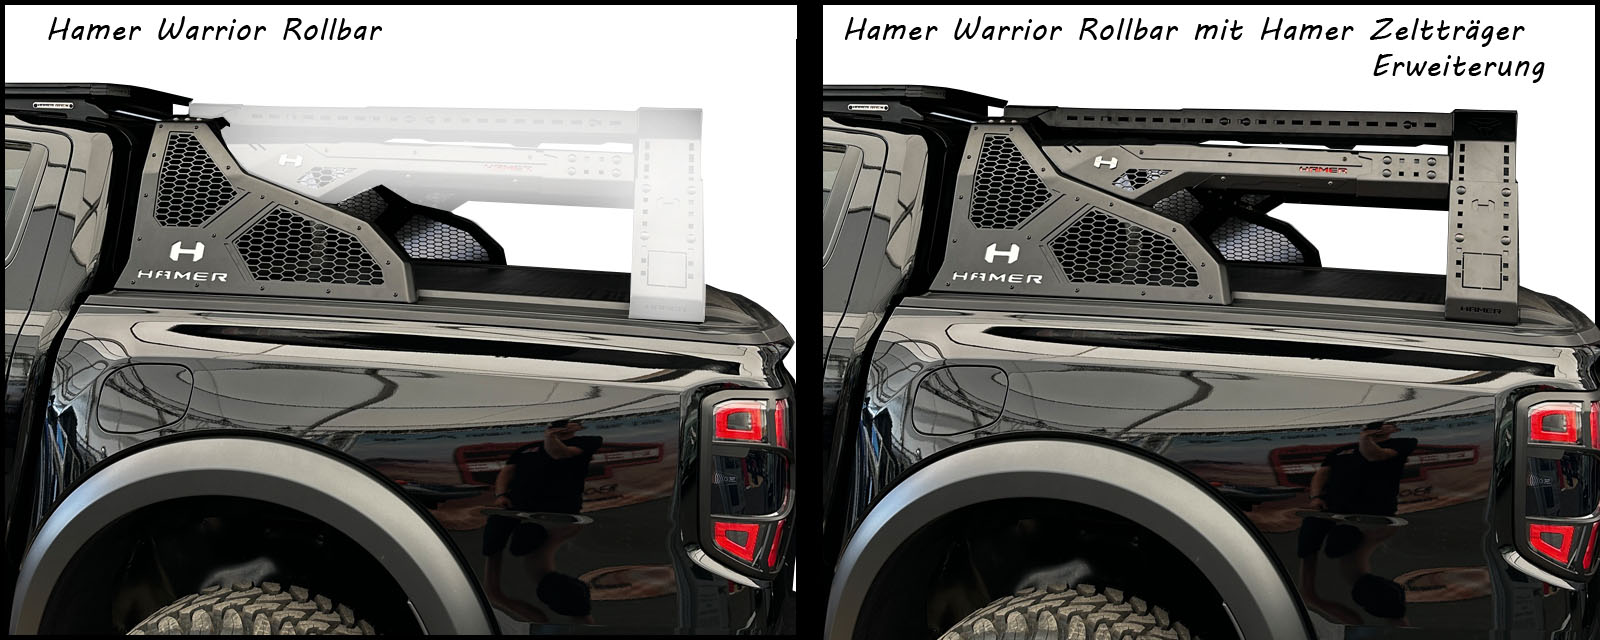 hamer warrior rollbar with tent rack extension 1